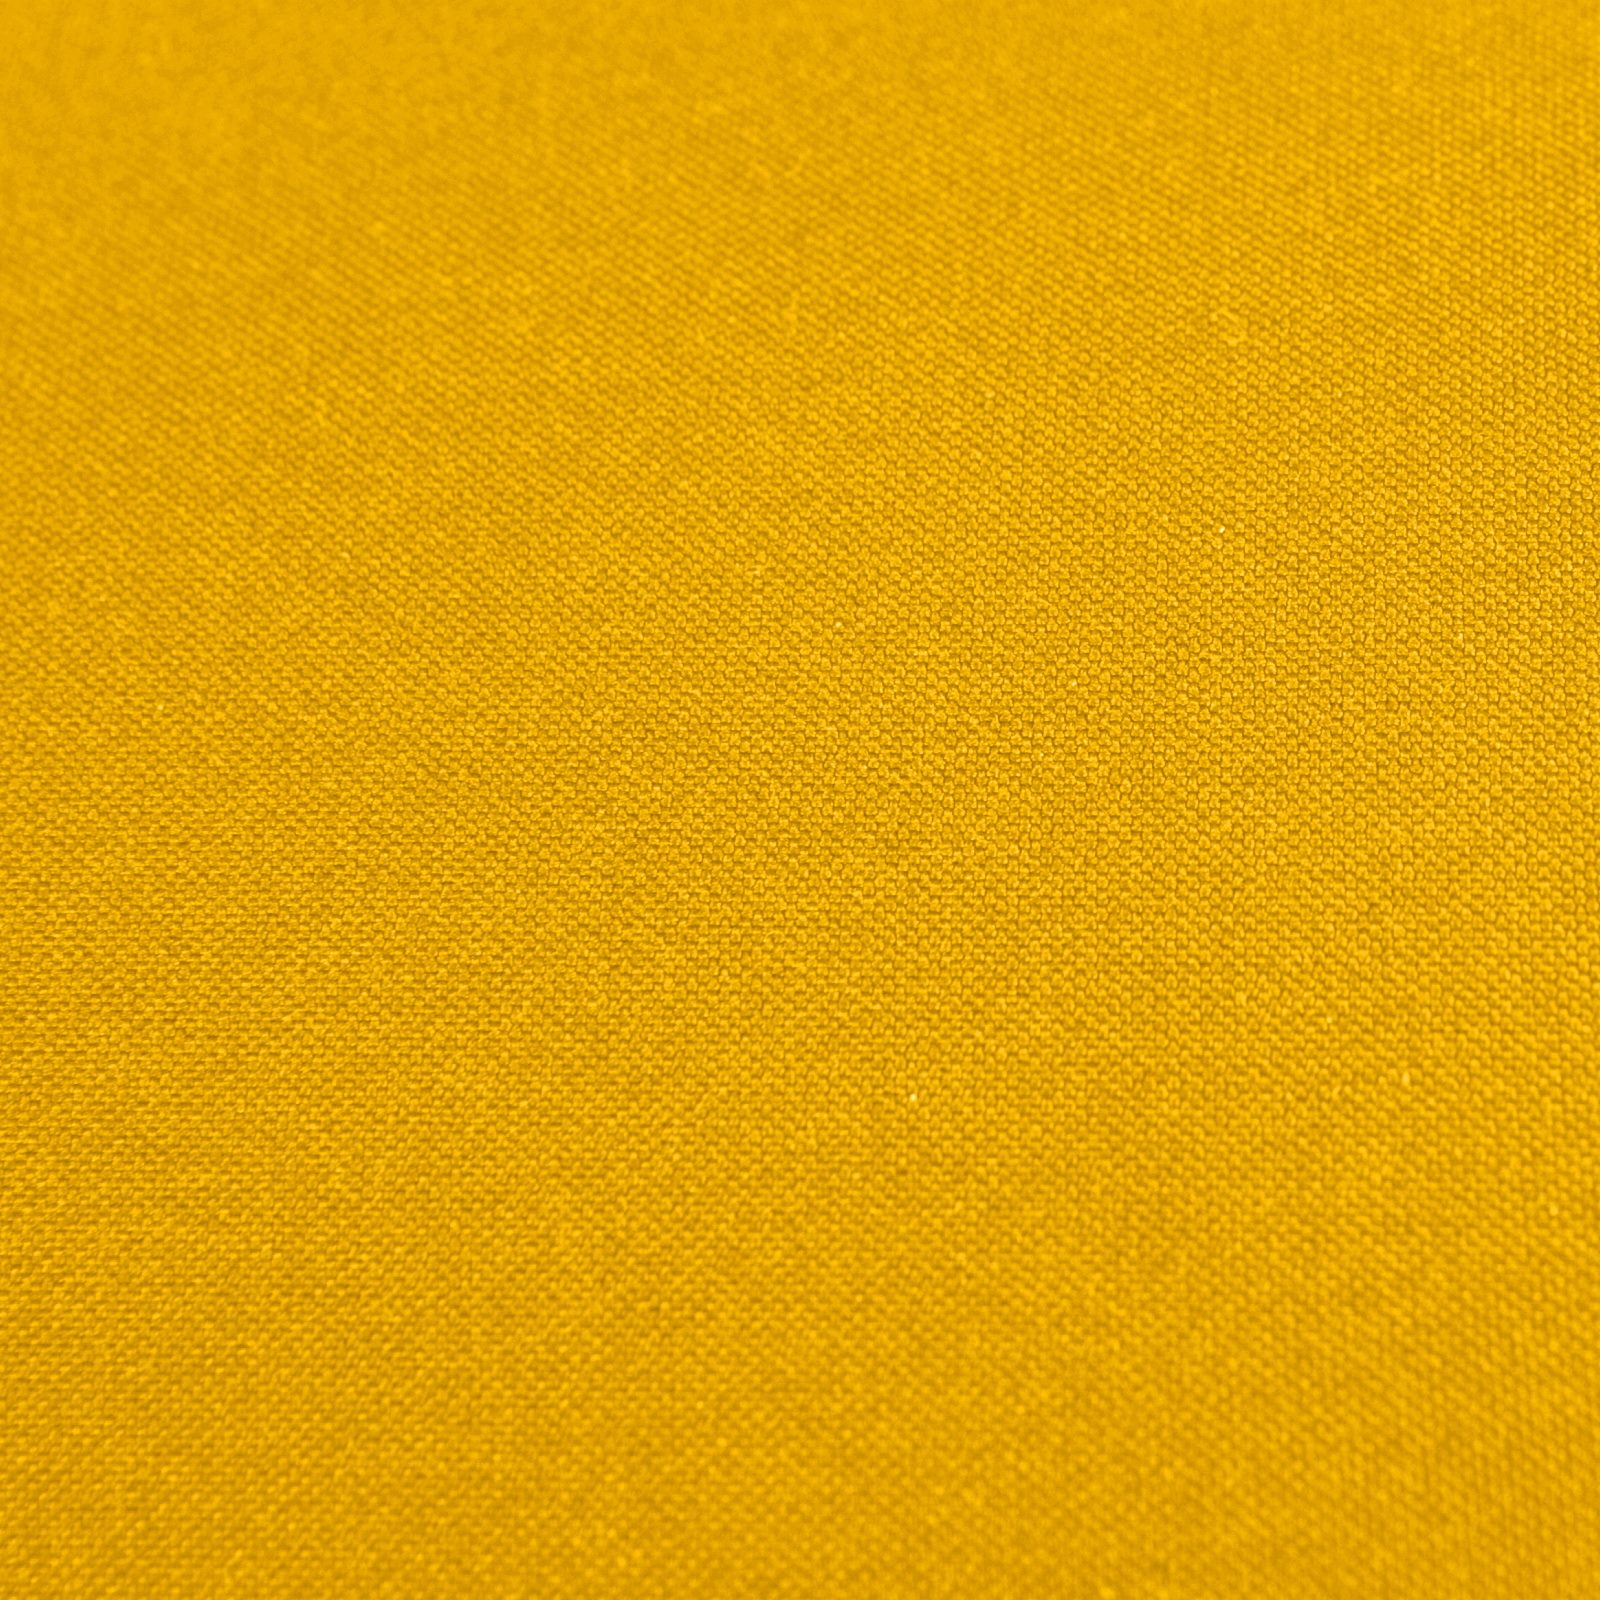 Komplettkissen Polyester-Gelb / 50x50 cm